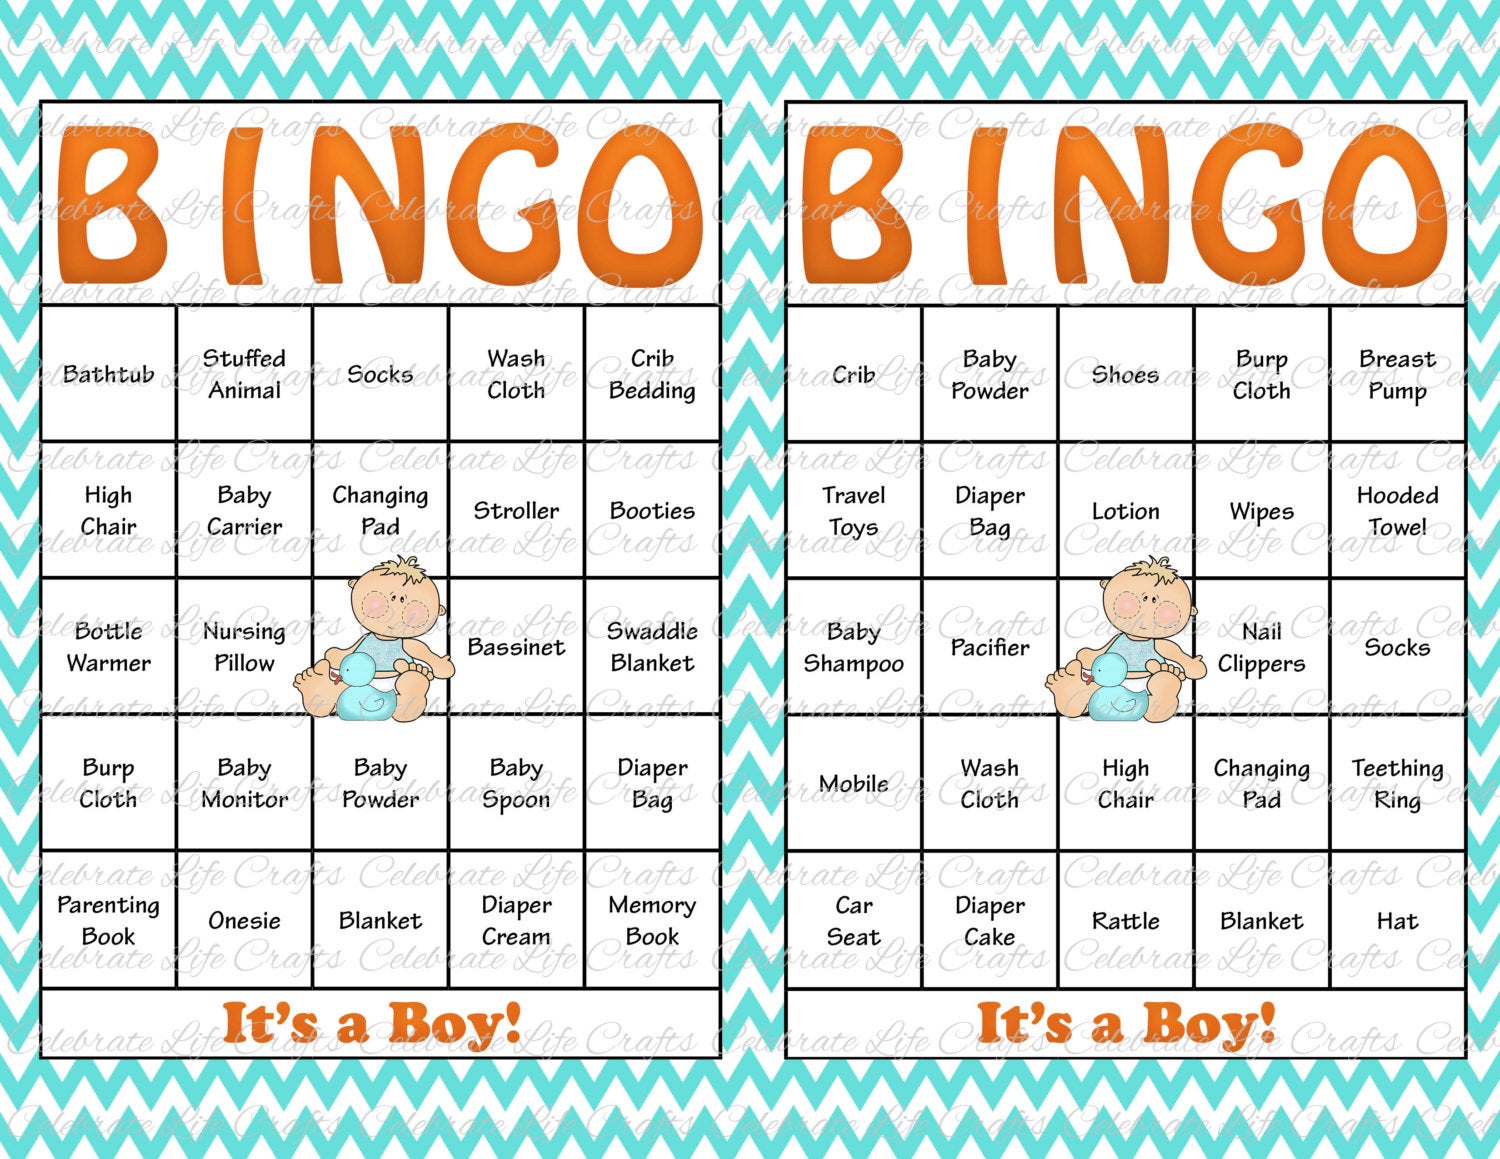 Free baby shower bingo printable